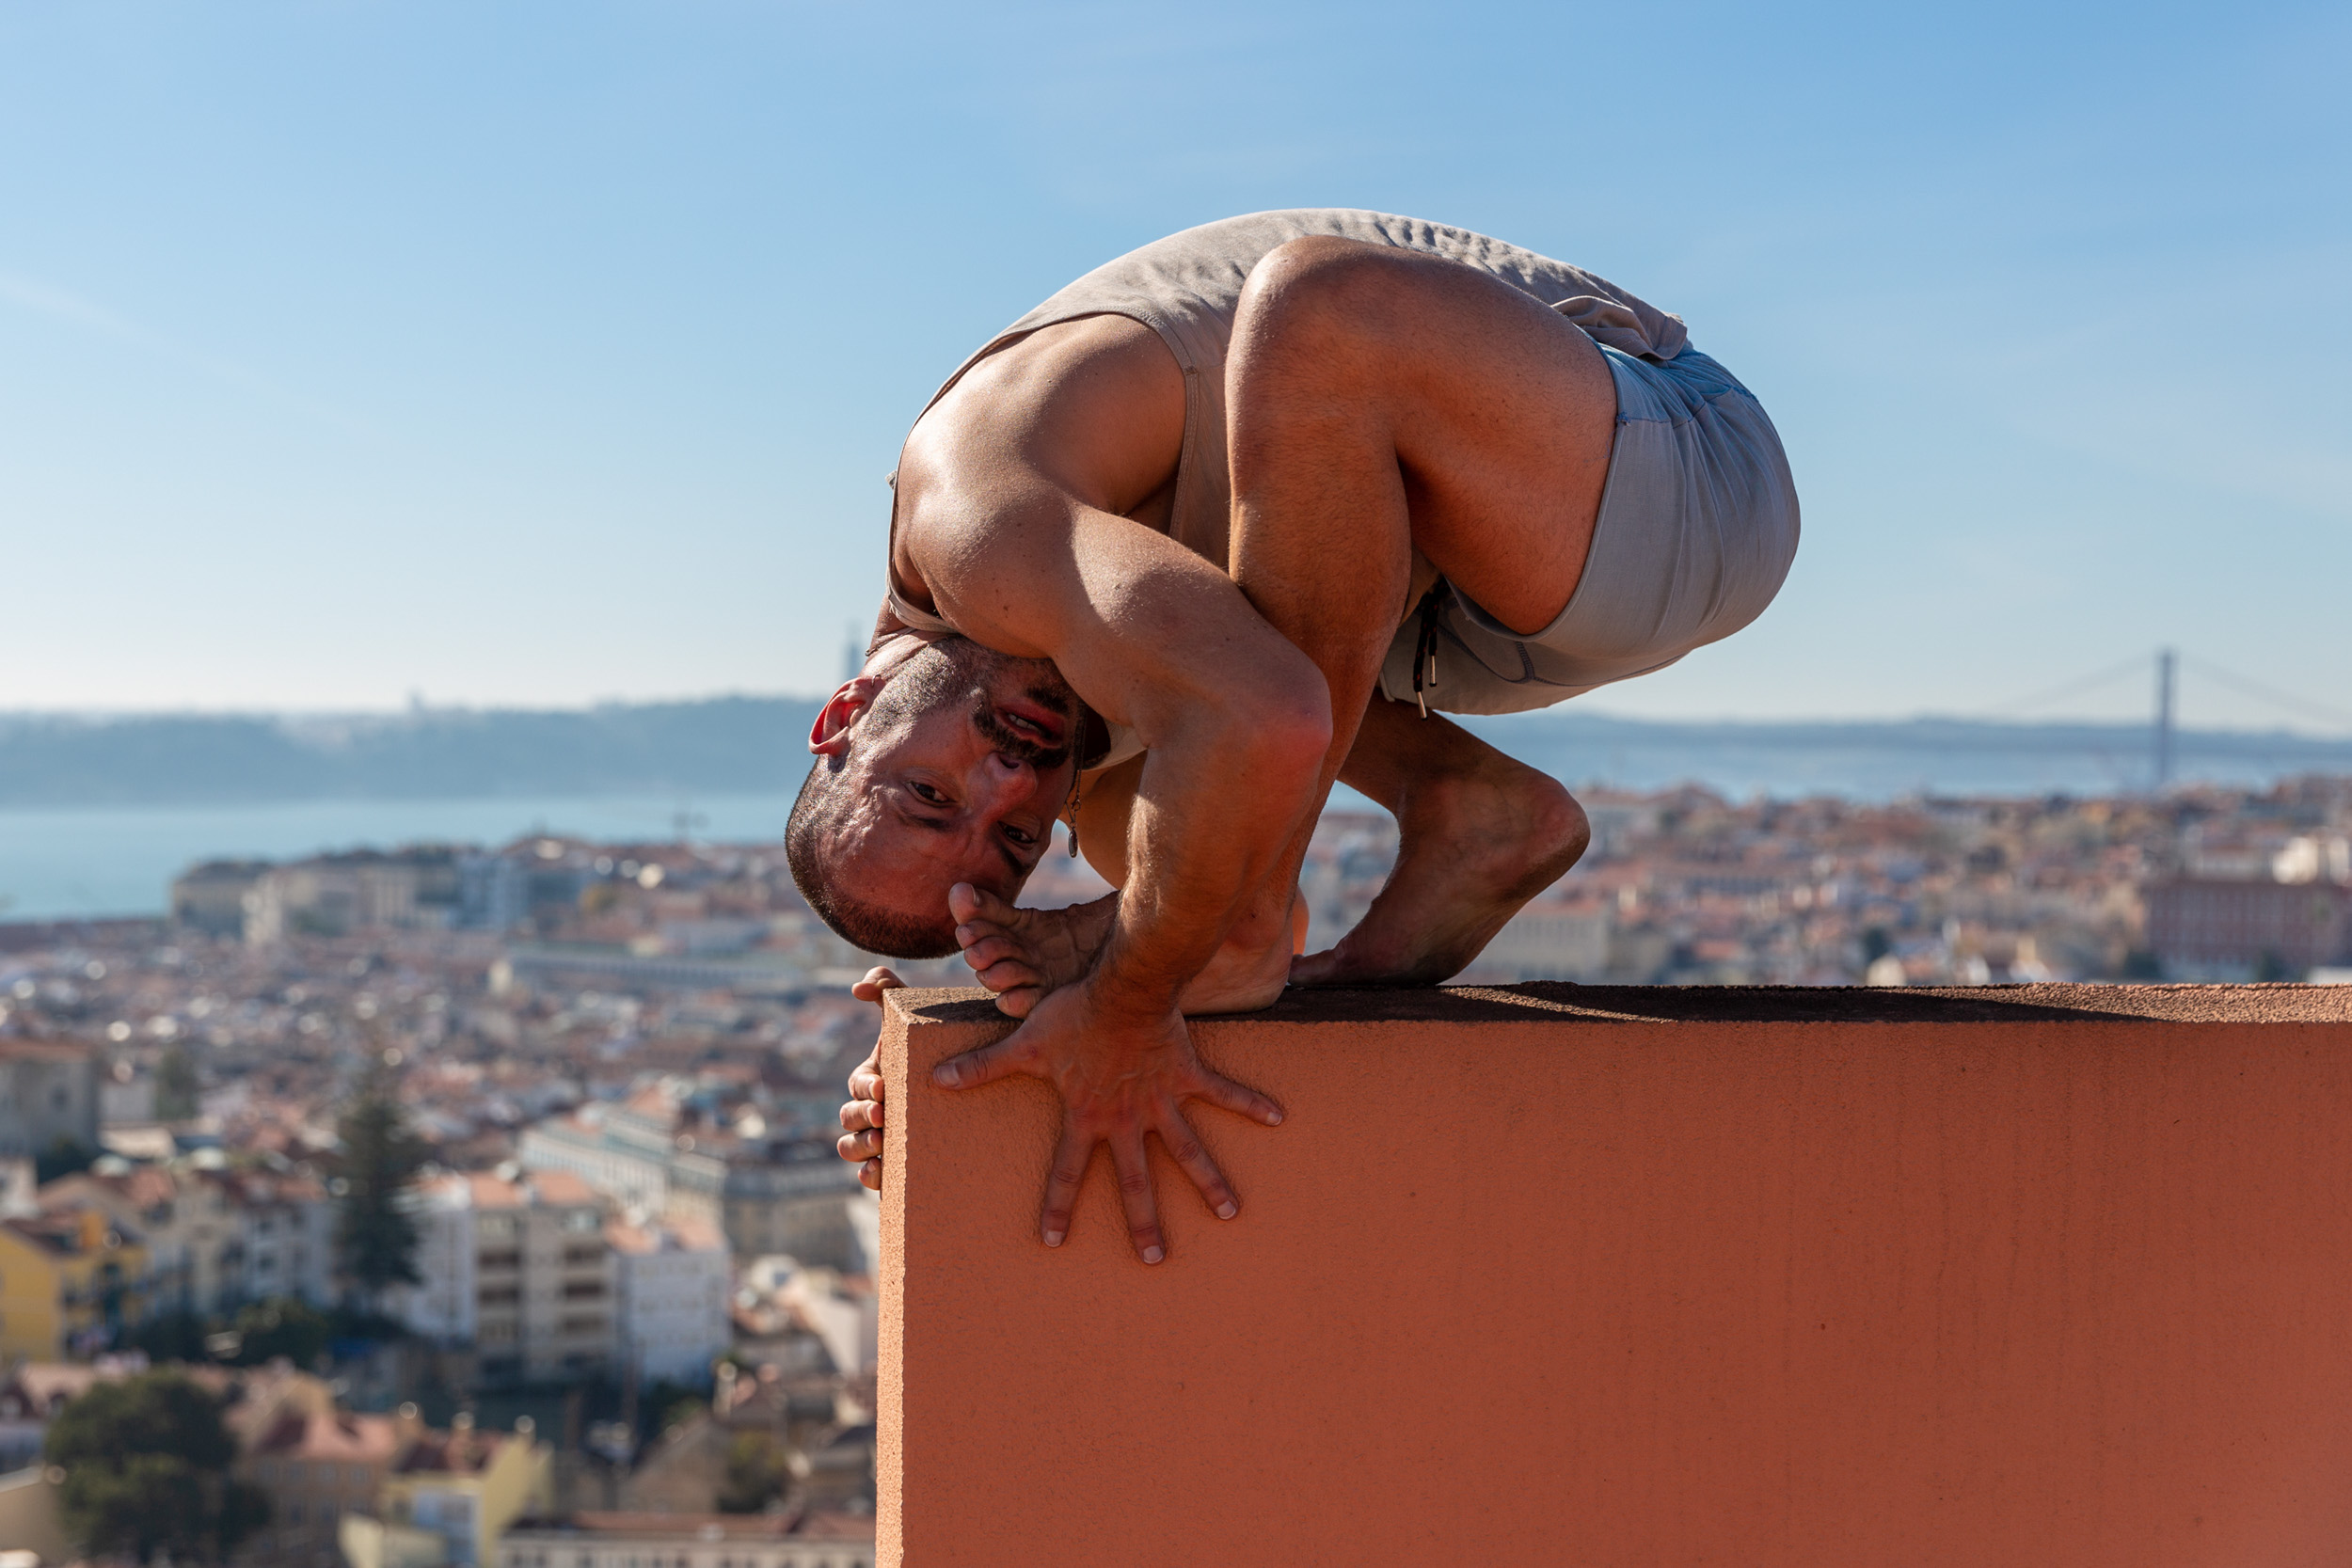 Tiago Martins for Dancers on Rooftops by Ben Hopper (2021)